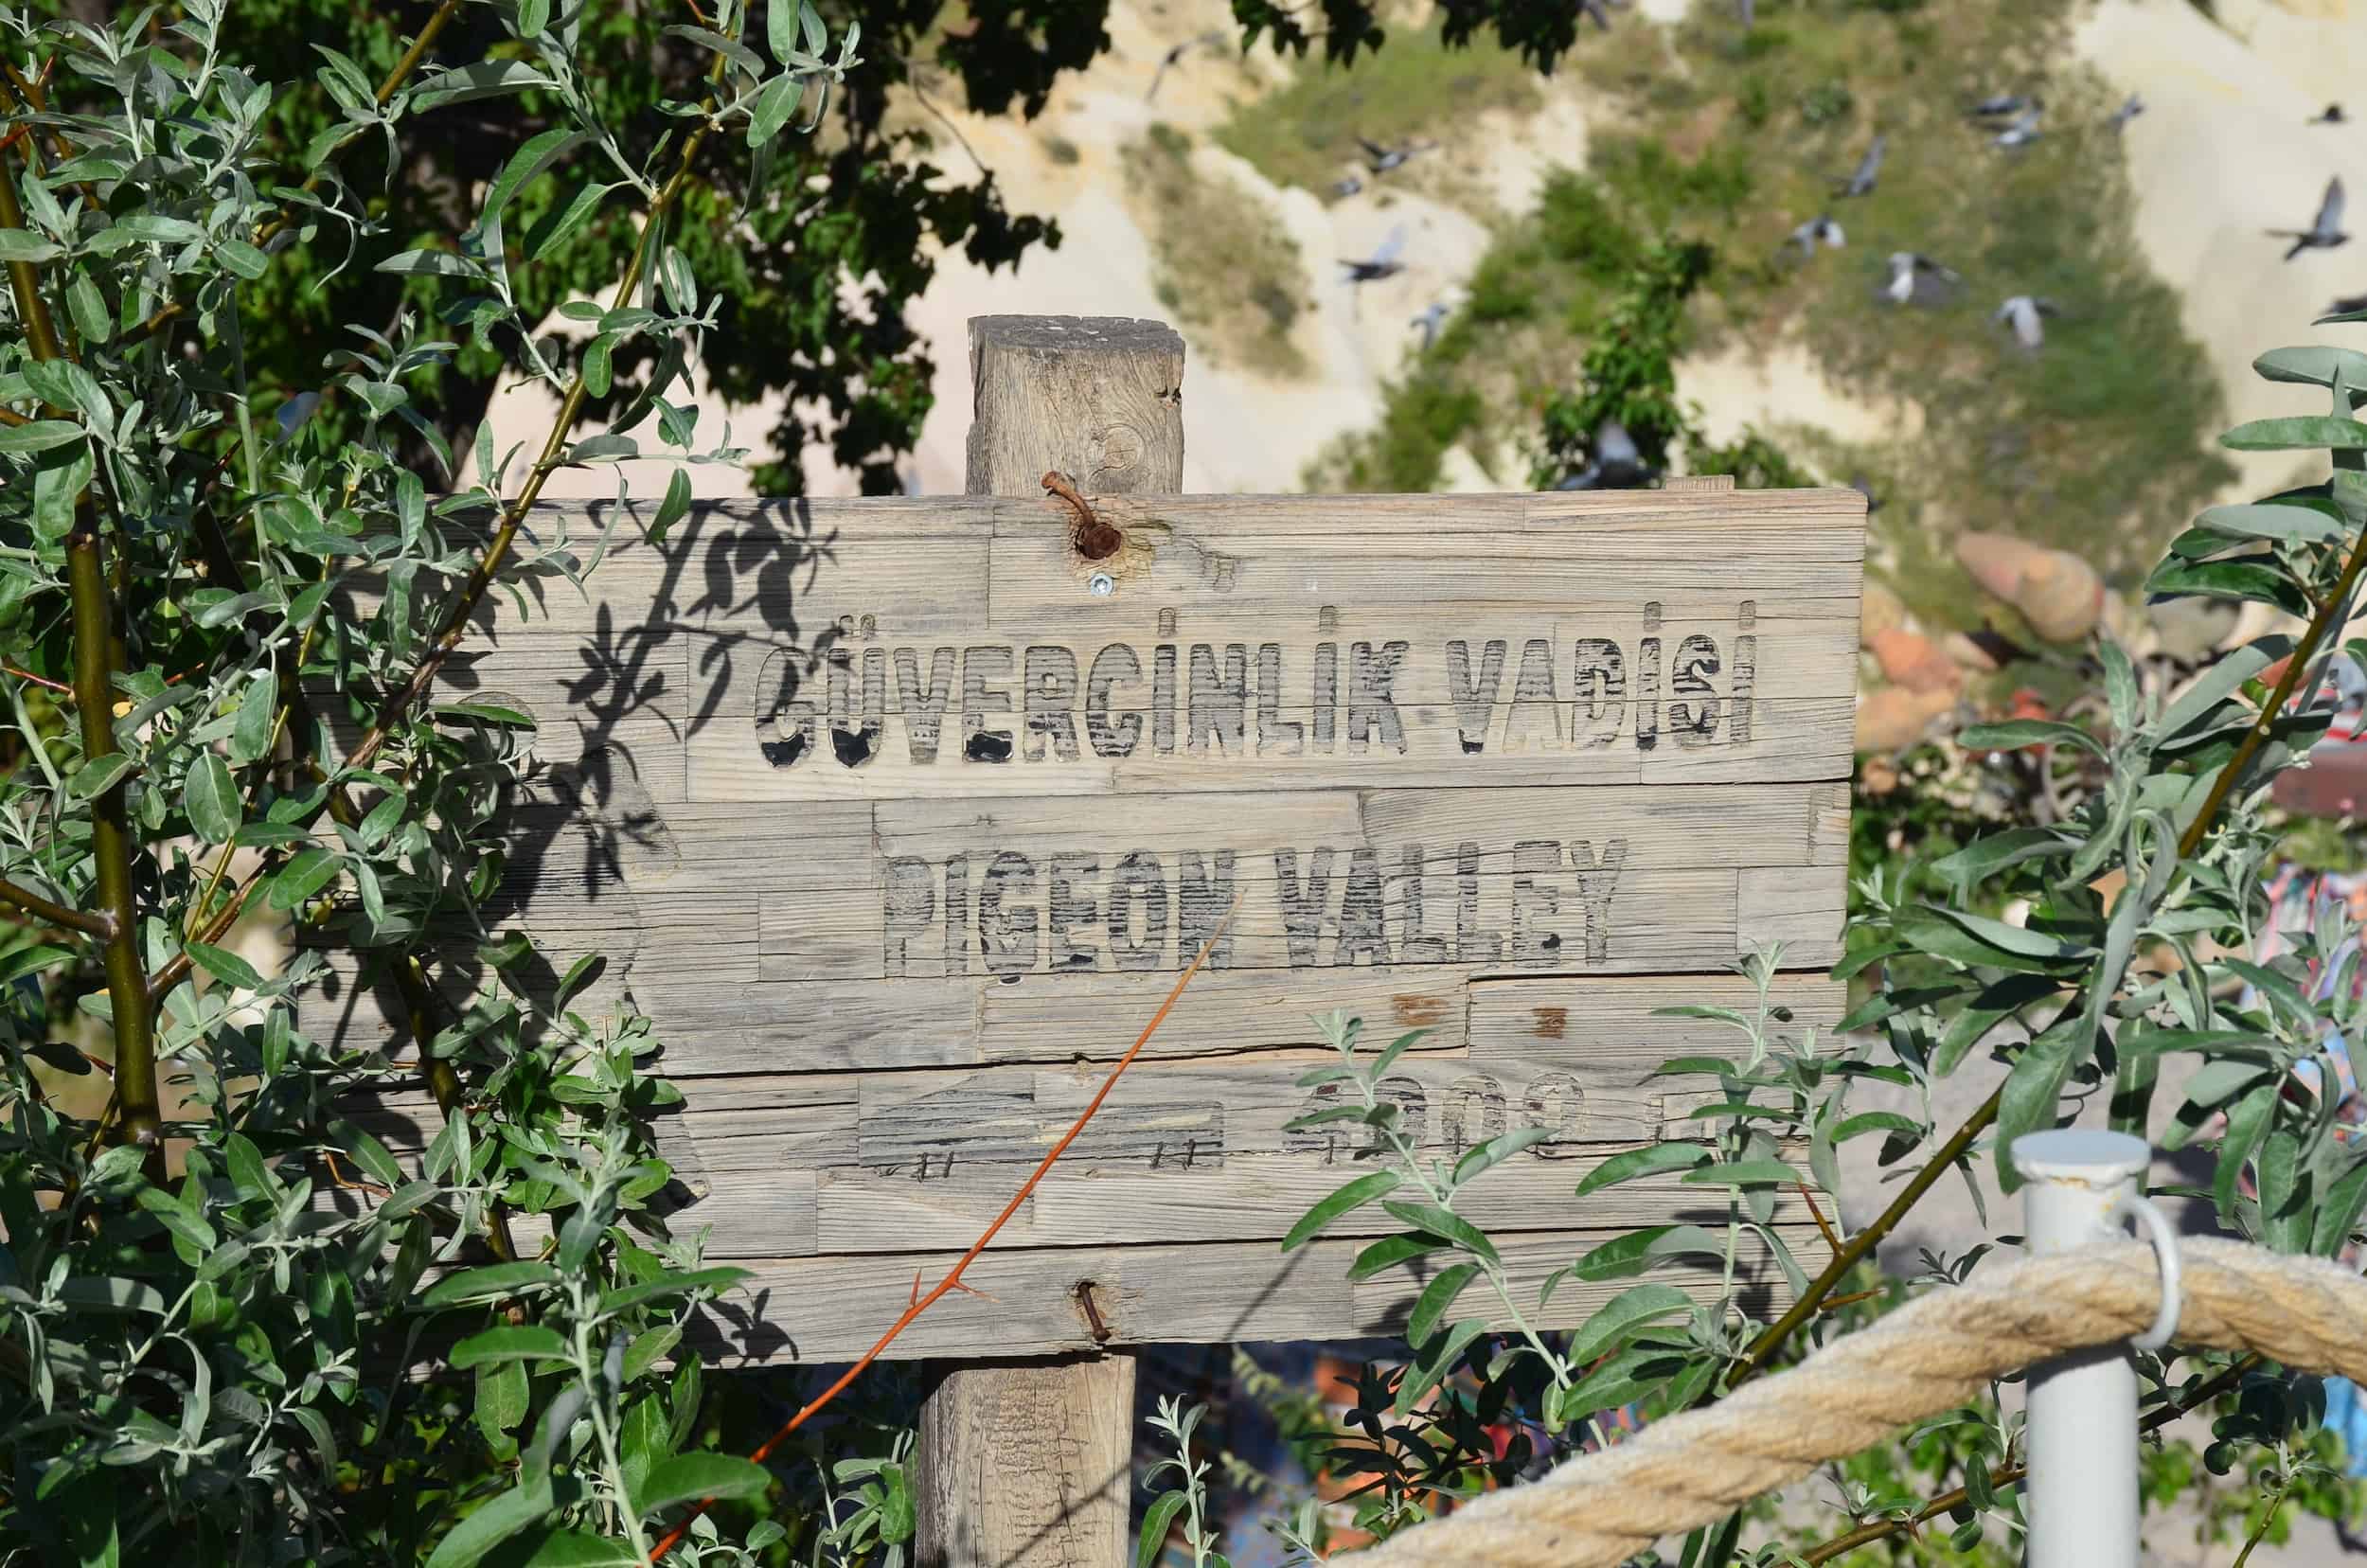 Pigeon Valley